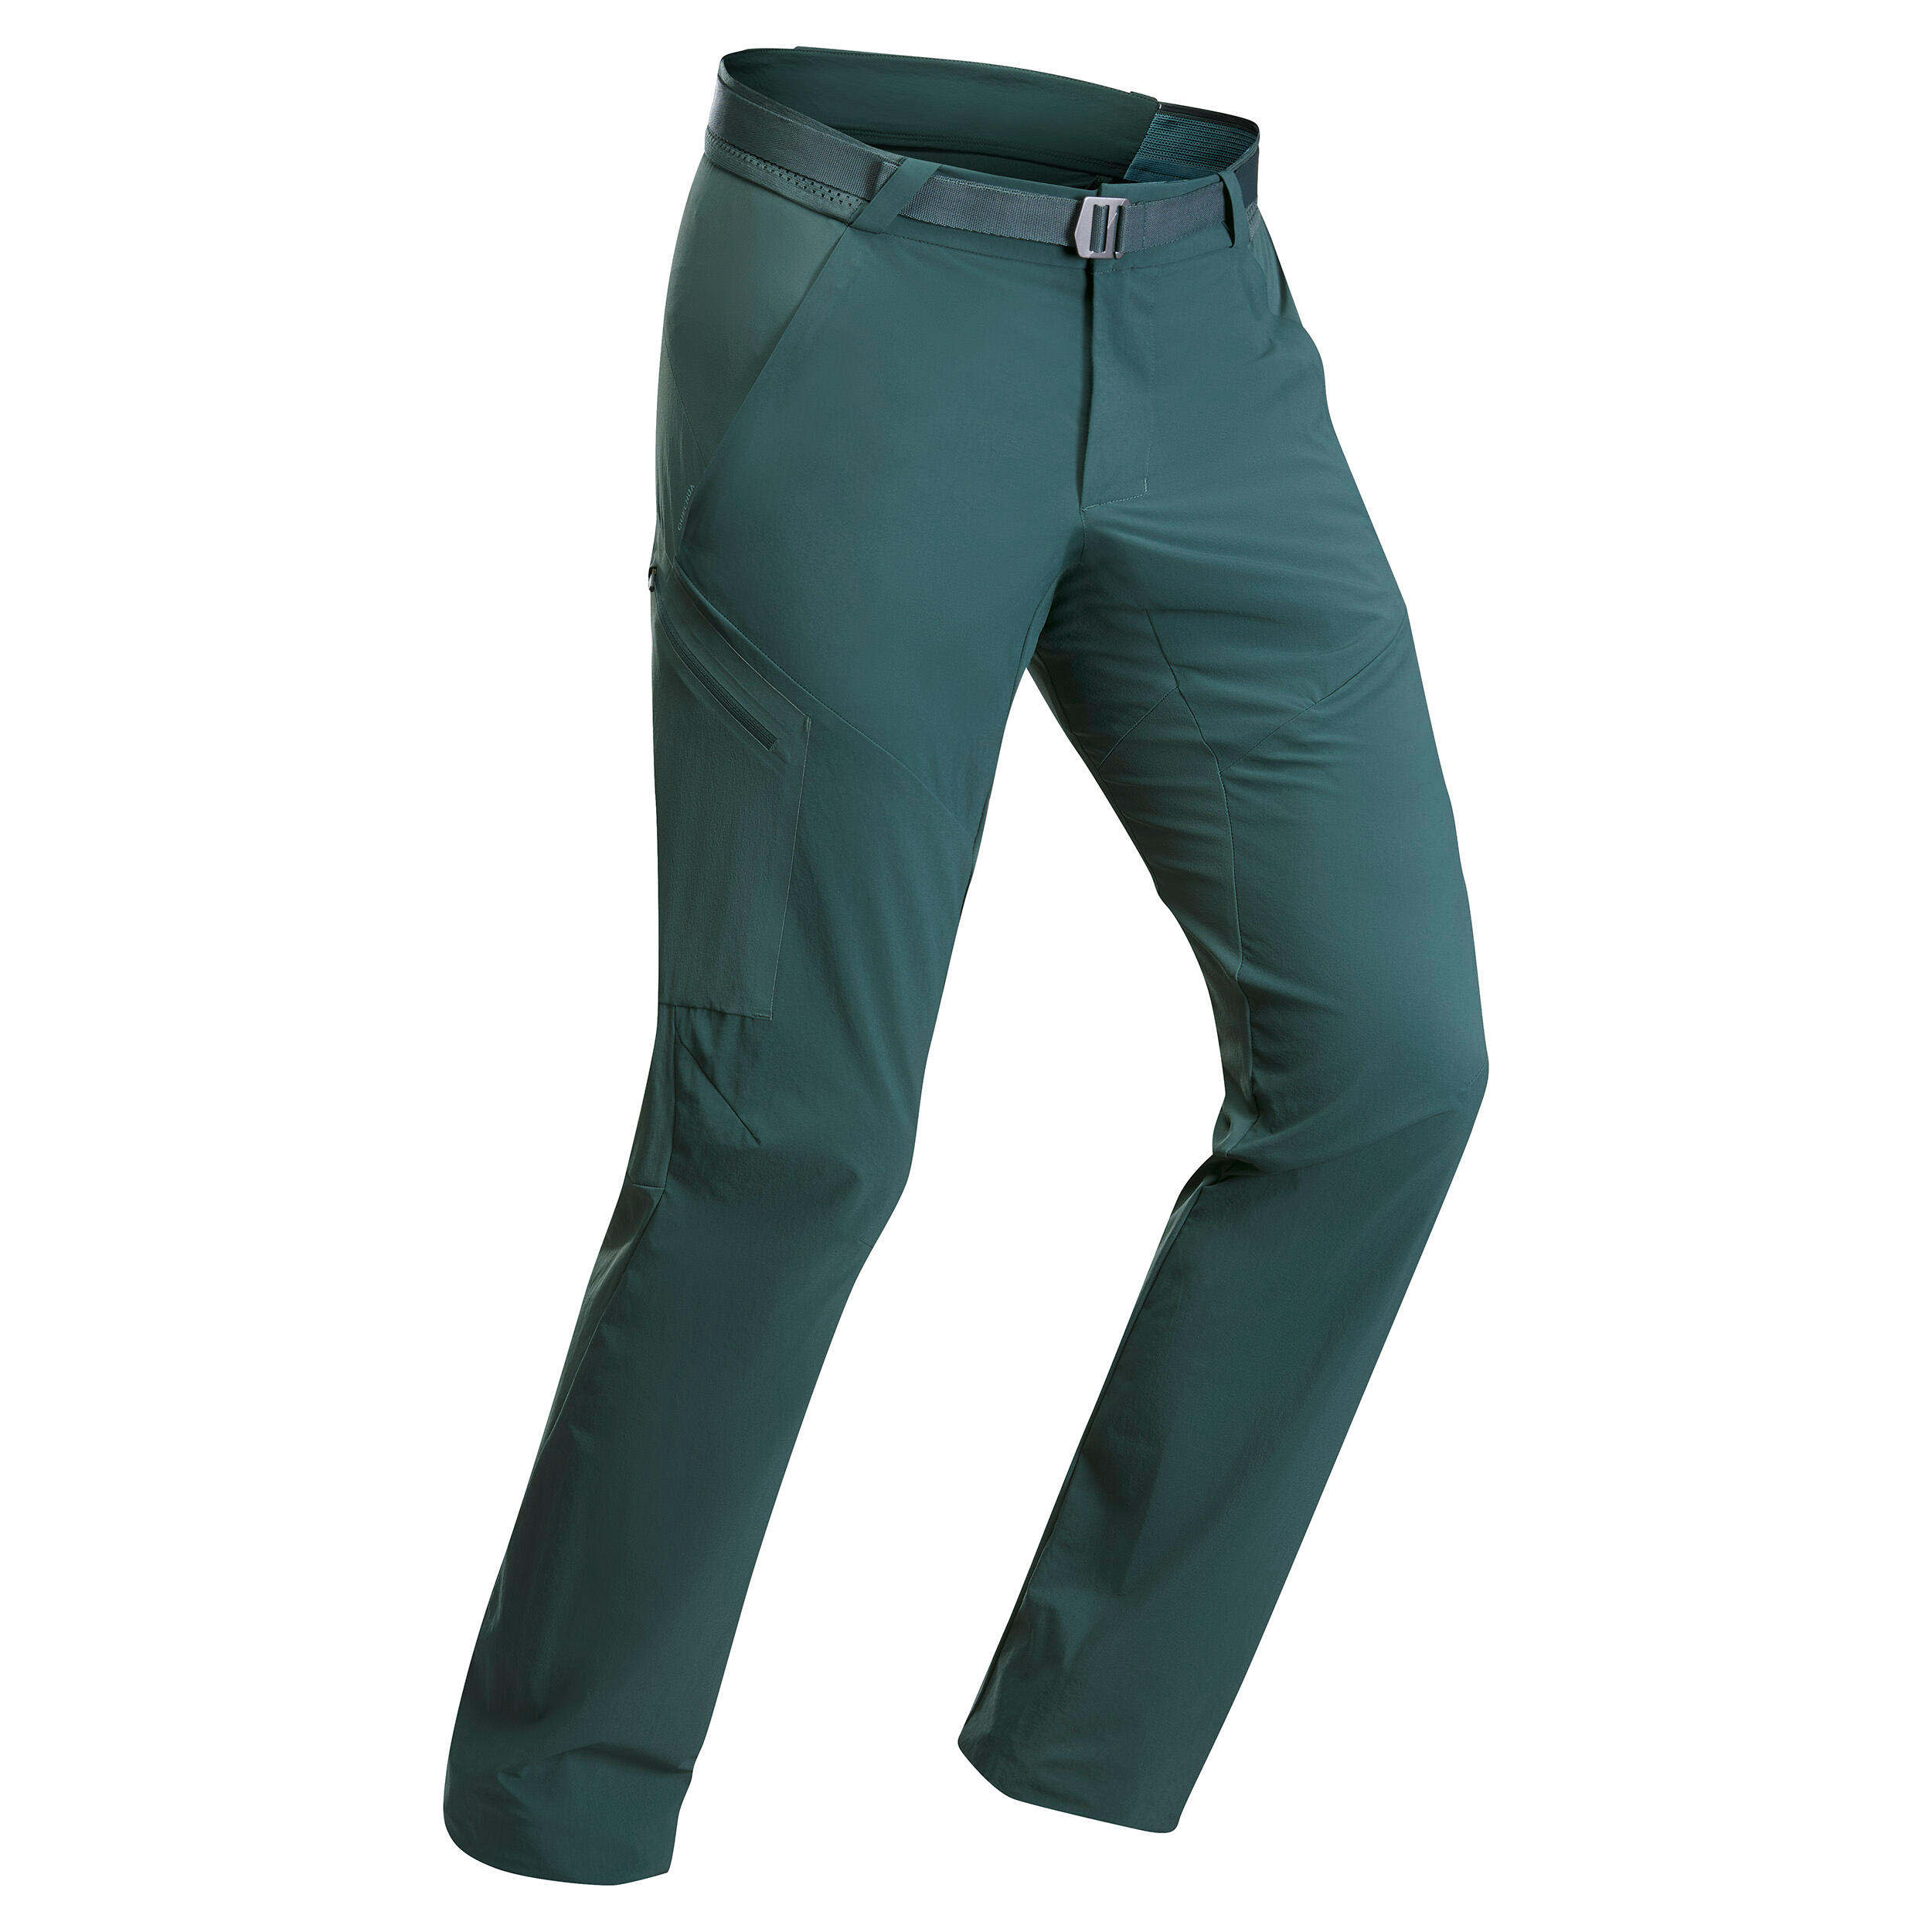 Buy Street Studio Men's Hiking Trousers Regular Fit- Decathlon Cargo- Dark  Grey Color (XL) at Amazon.in